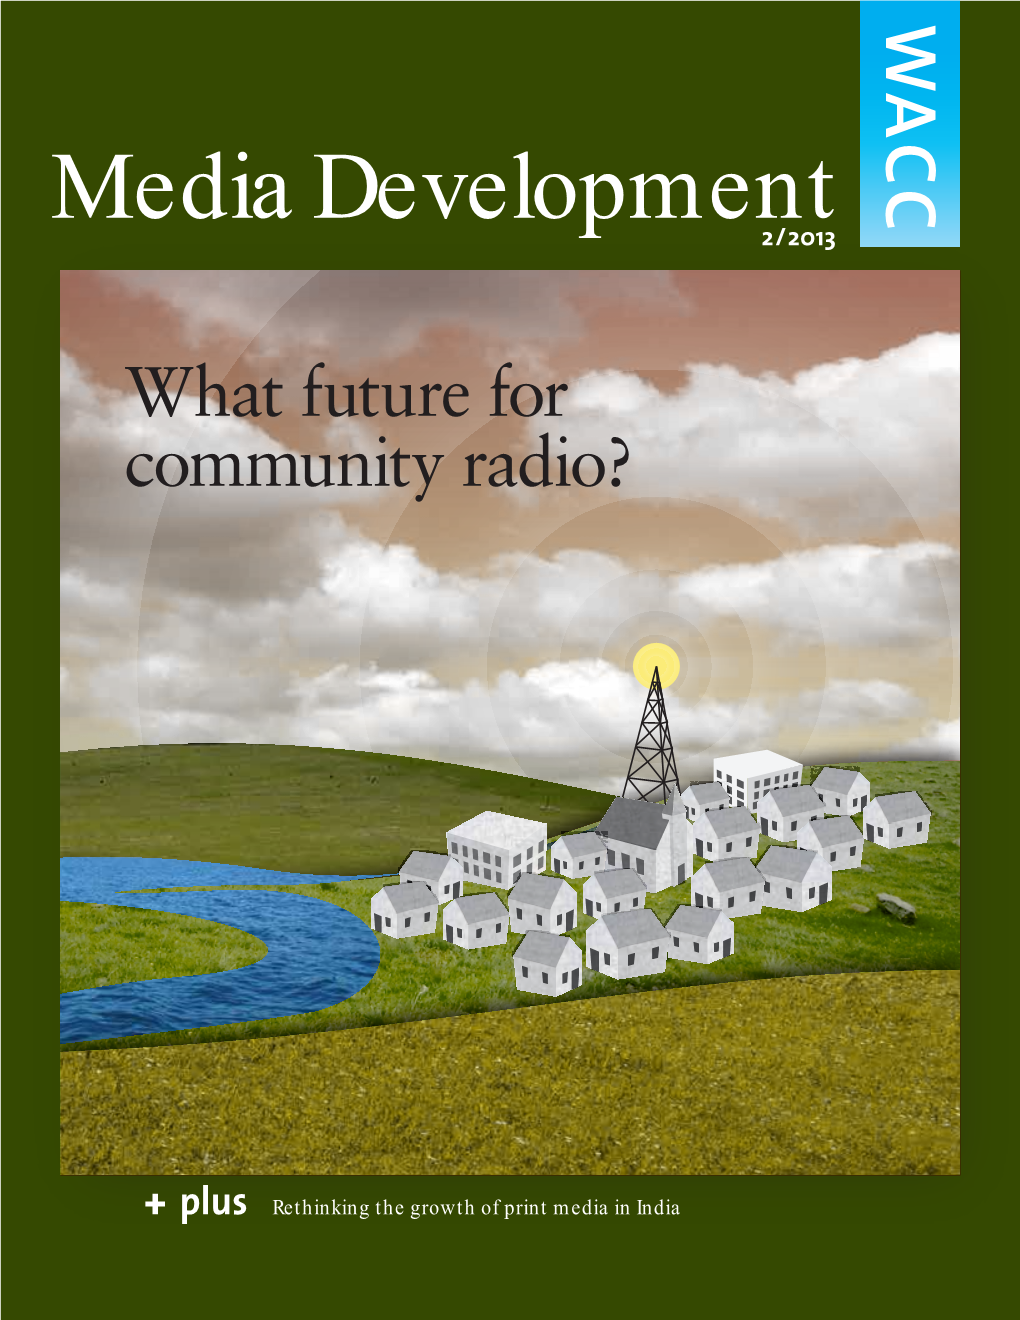 Media Development2/2013